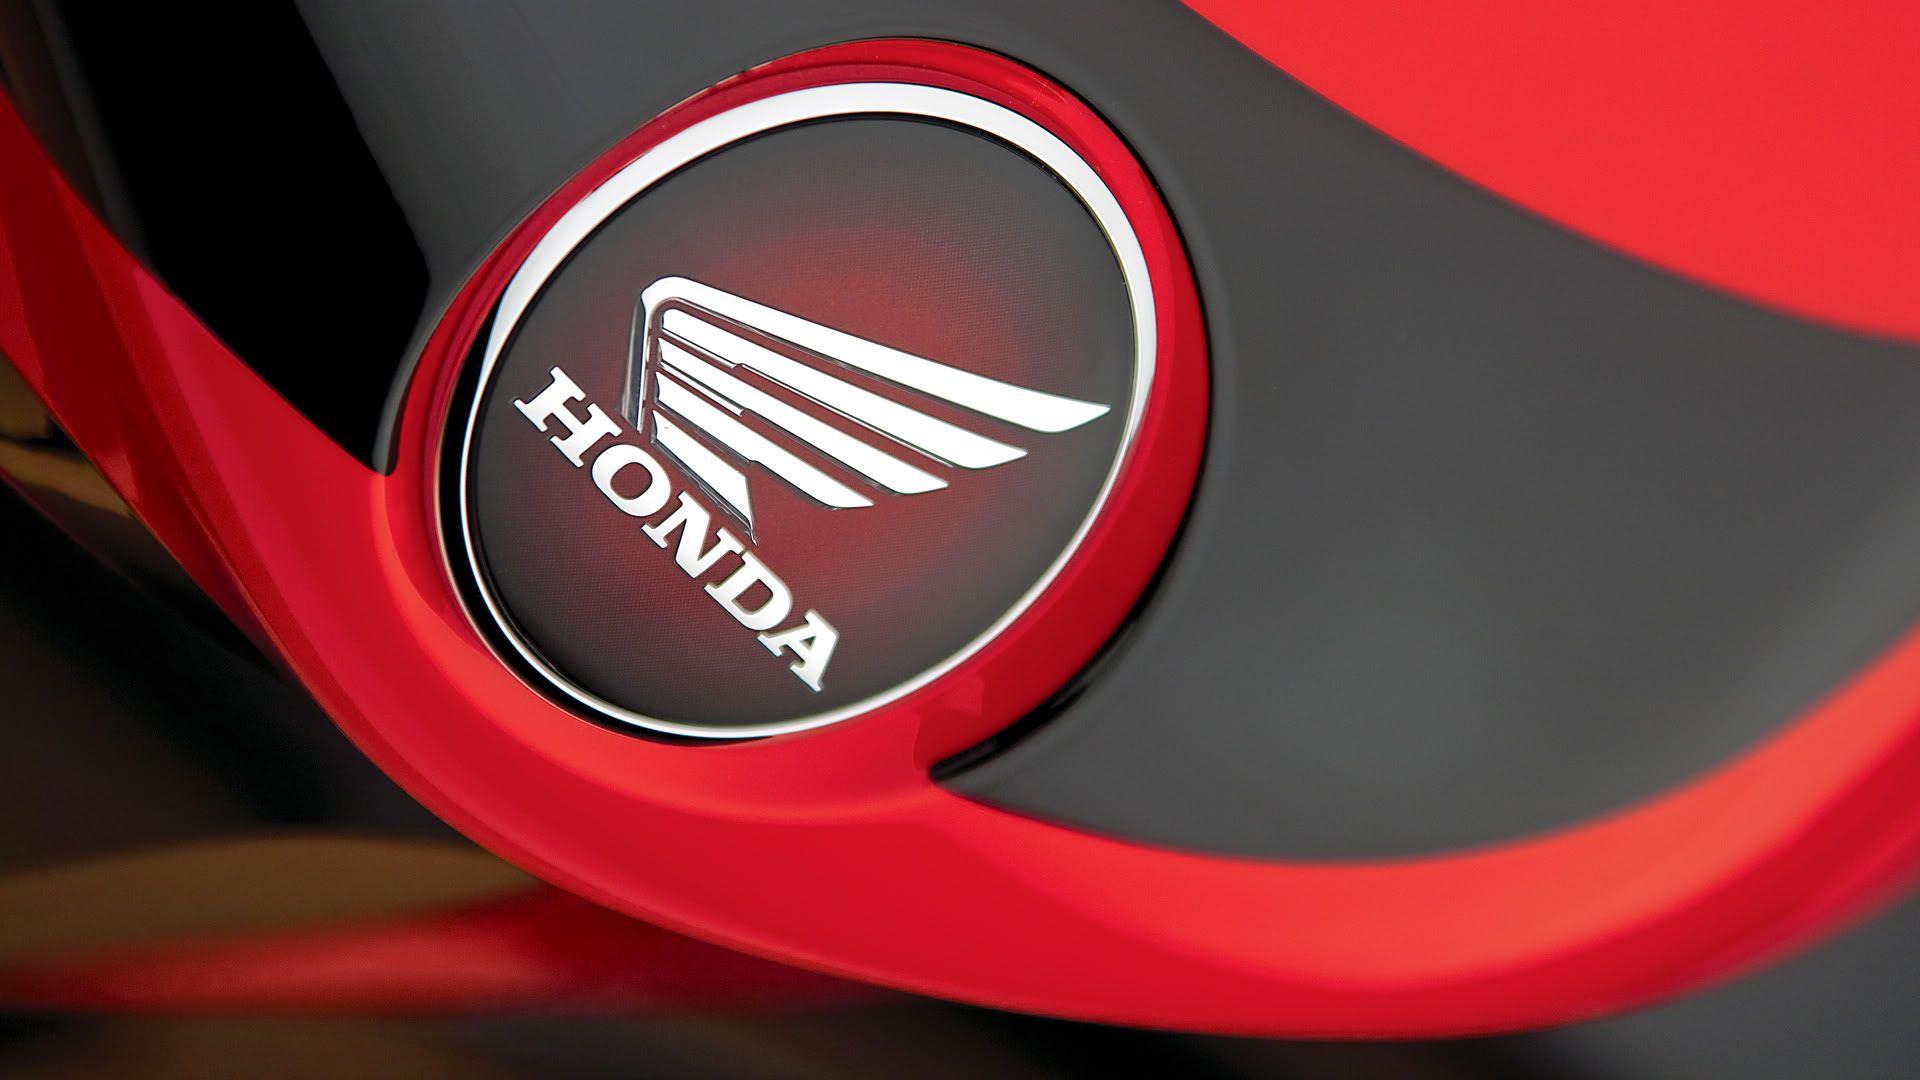 1920x1080 Hd Honda Background Honda Wallpaper Image For Download